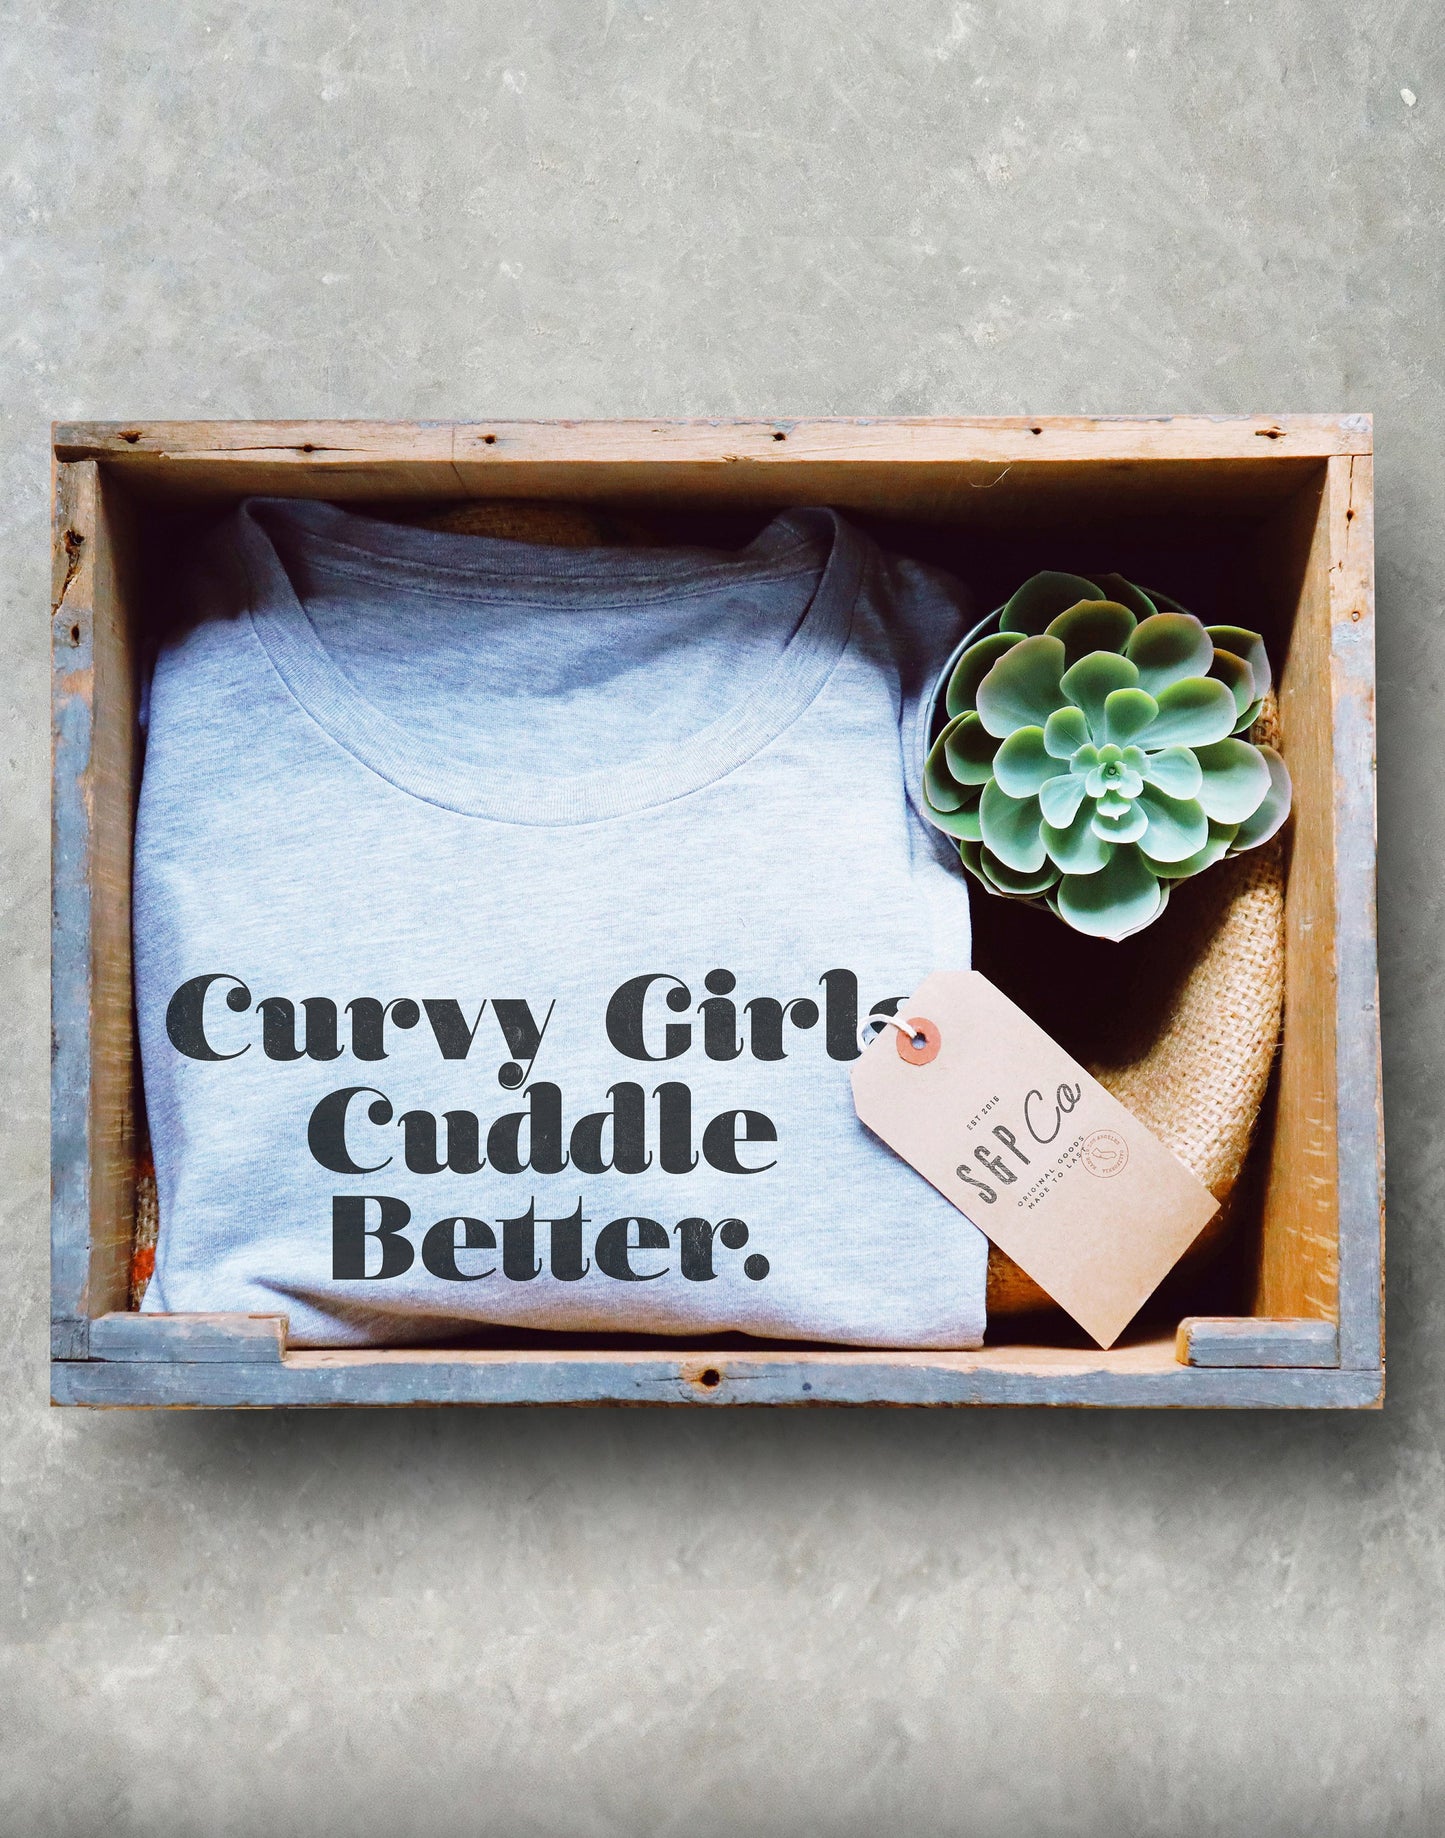 Curvy Girls Cuddle Better Unisex Shirt - Curvy Girl Shirt, Curvy Girl Gift, Girl Power Shirt, Feminist Shirt, Thick Thighs Shirt